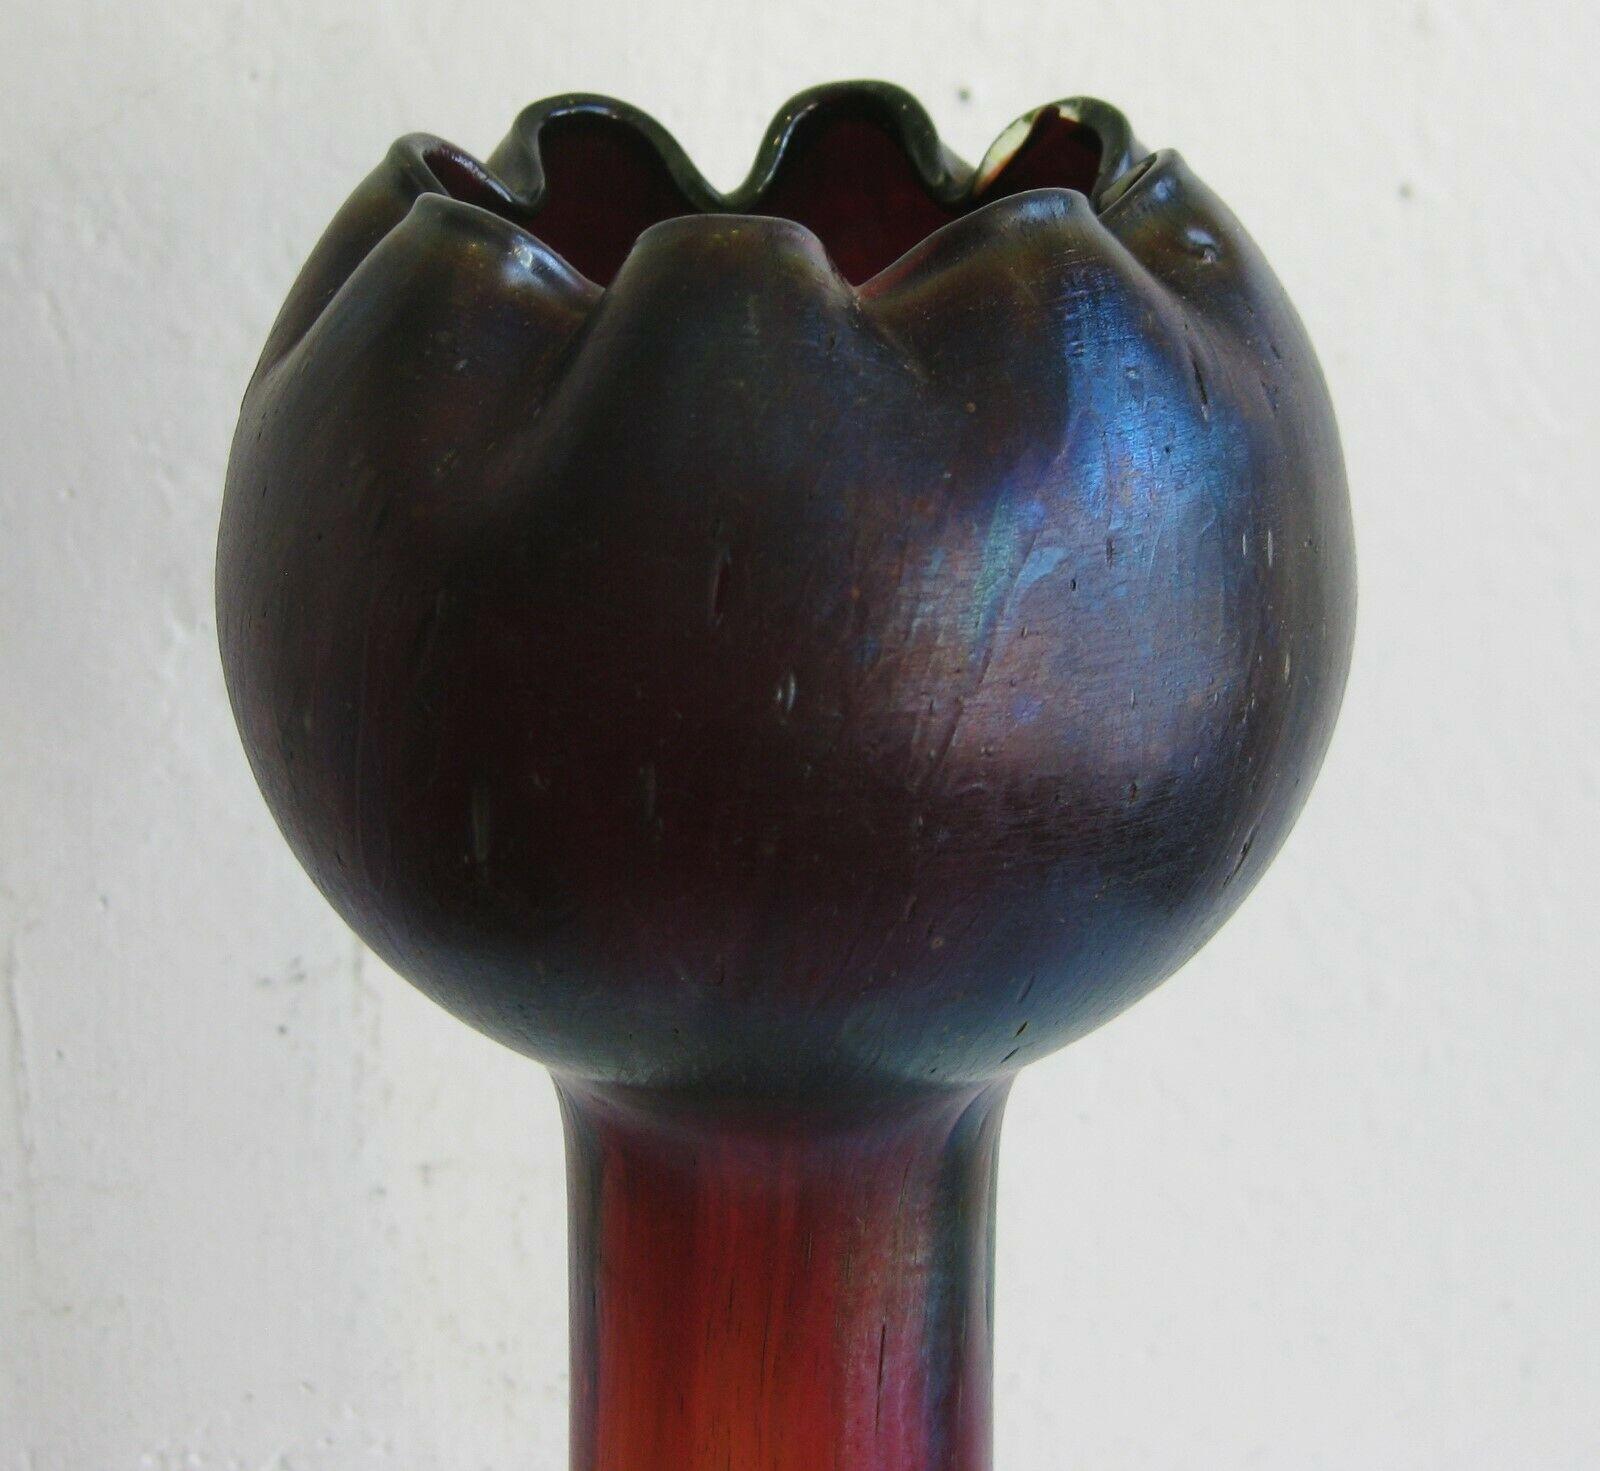 Seldom seen original Art Nouveau Czech Bohemian art glass studio vase made by Rindskopf and designed by Josef Rindskopf Shone. Pattern is Pepita and called the 